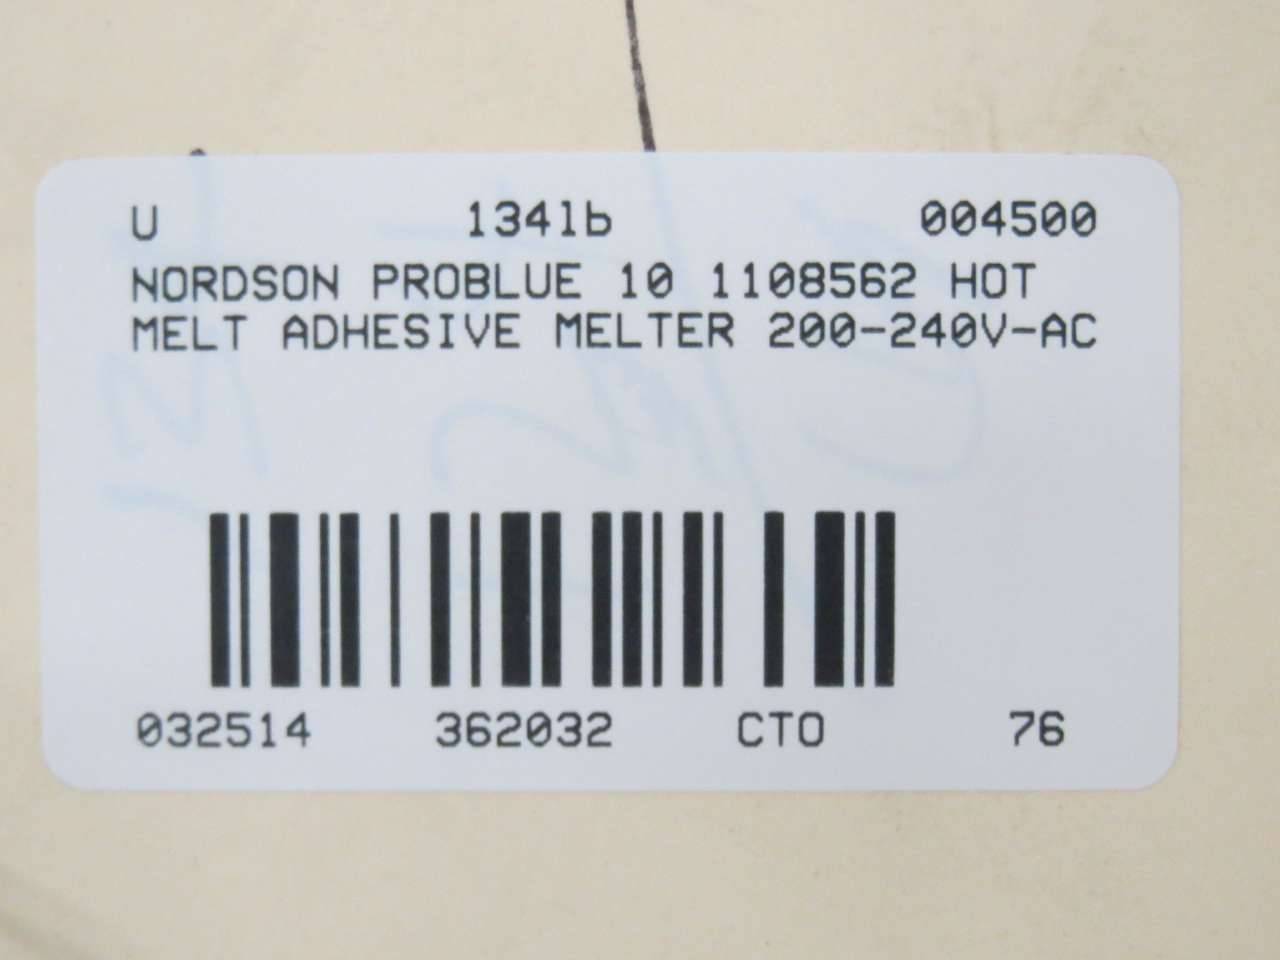 Nordson PROBLUE 10 1108562 Hot Melt Adhesive Melter 200-240v-ac B362032